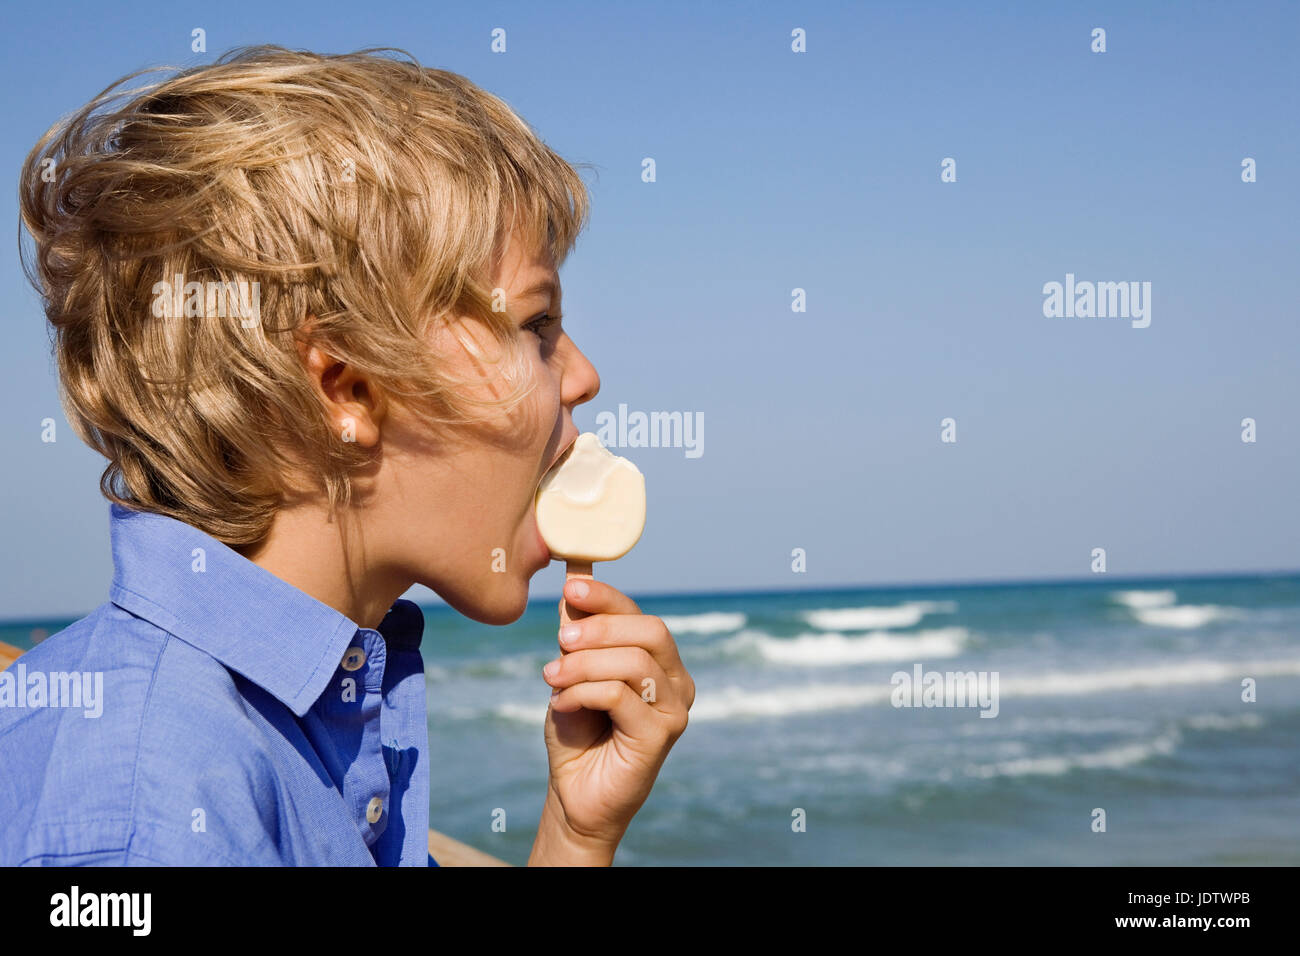 Boy eating an ice cream at a beach Stock Photo